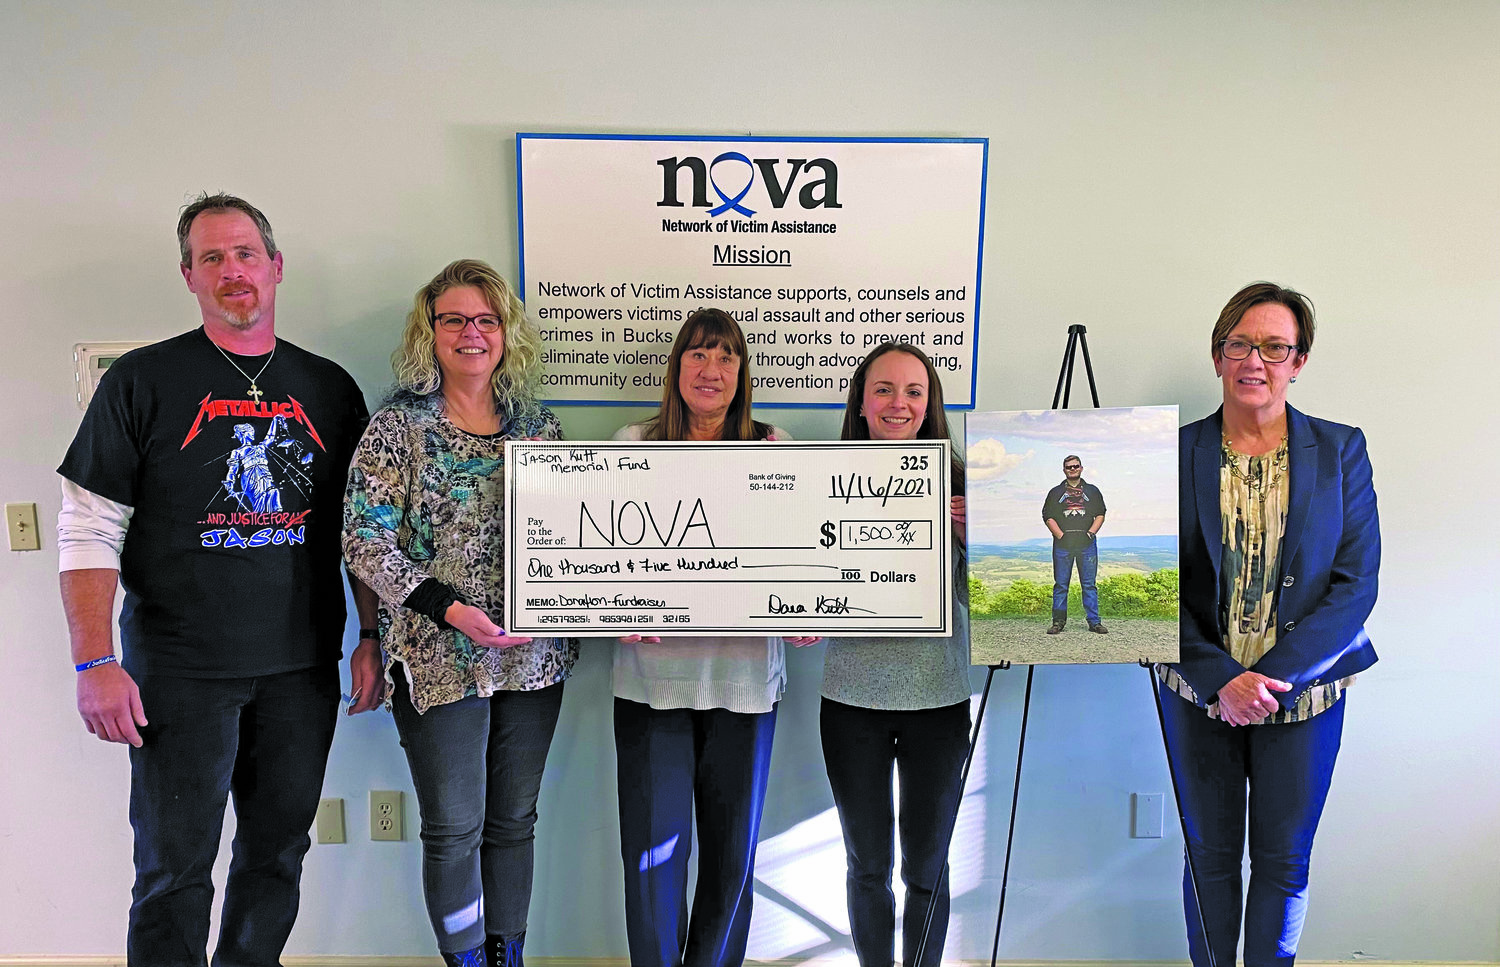 Network of Victim Assistance (NOVA) receives a $1,500 donation from the Kutt family following the Jason Kutt Annual Car Meet. From left are Ronald (Ron) Kutt, Dana Kutt, Susan Bizon, Jill Mann, and Penny Ettinger.